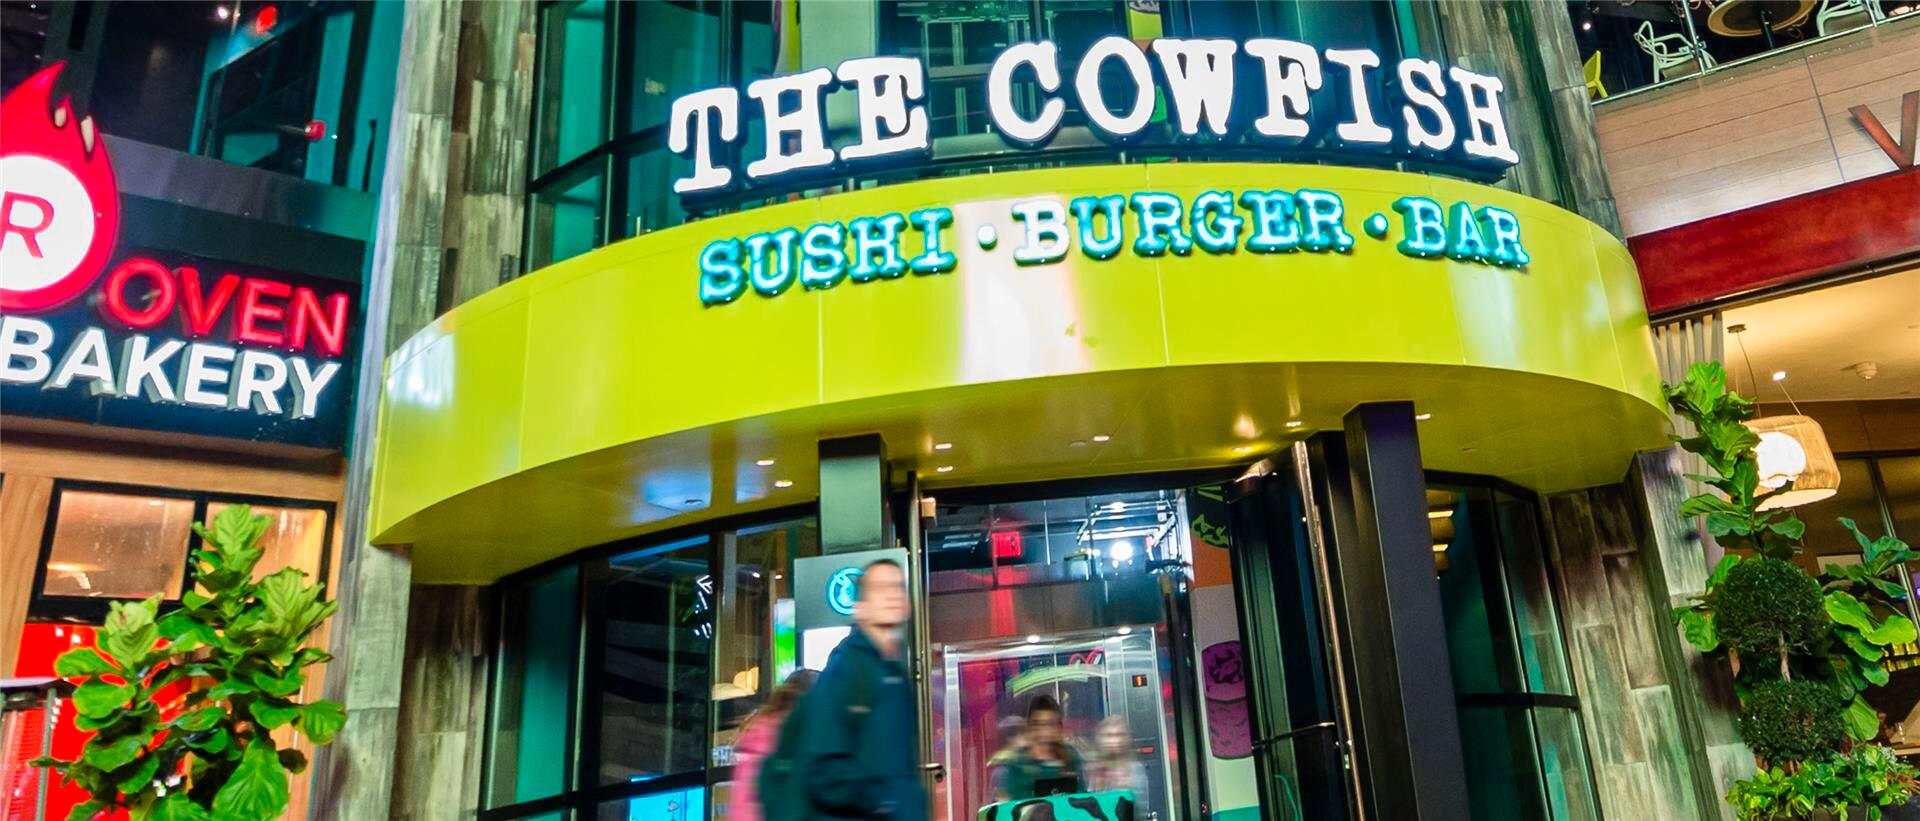 cowfish-sushi-burger-bar-citywalk-orlando-exterior-a-00.jpg